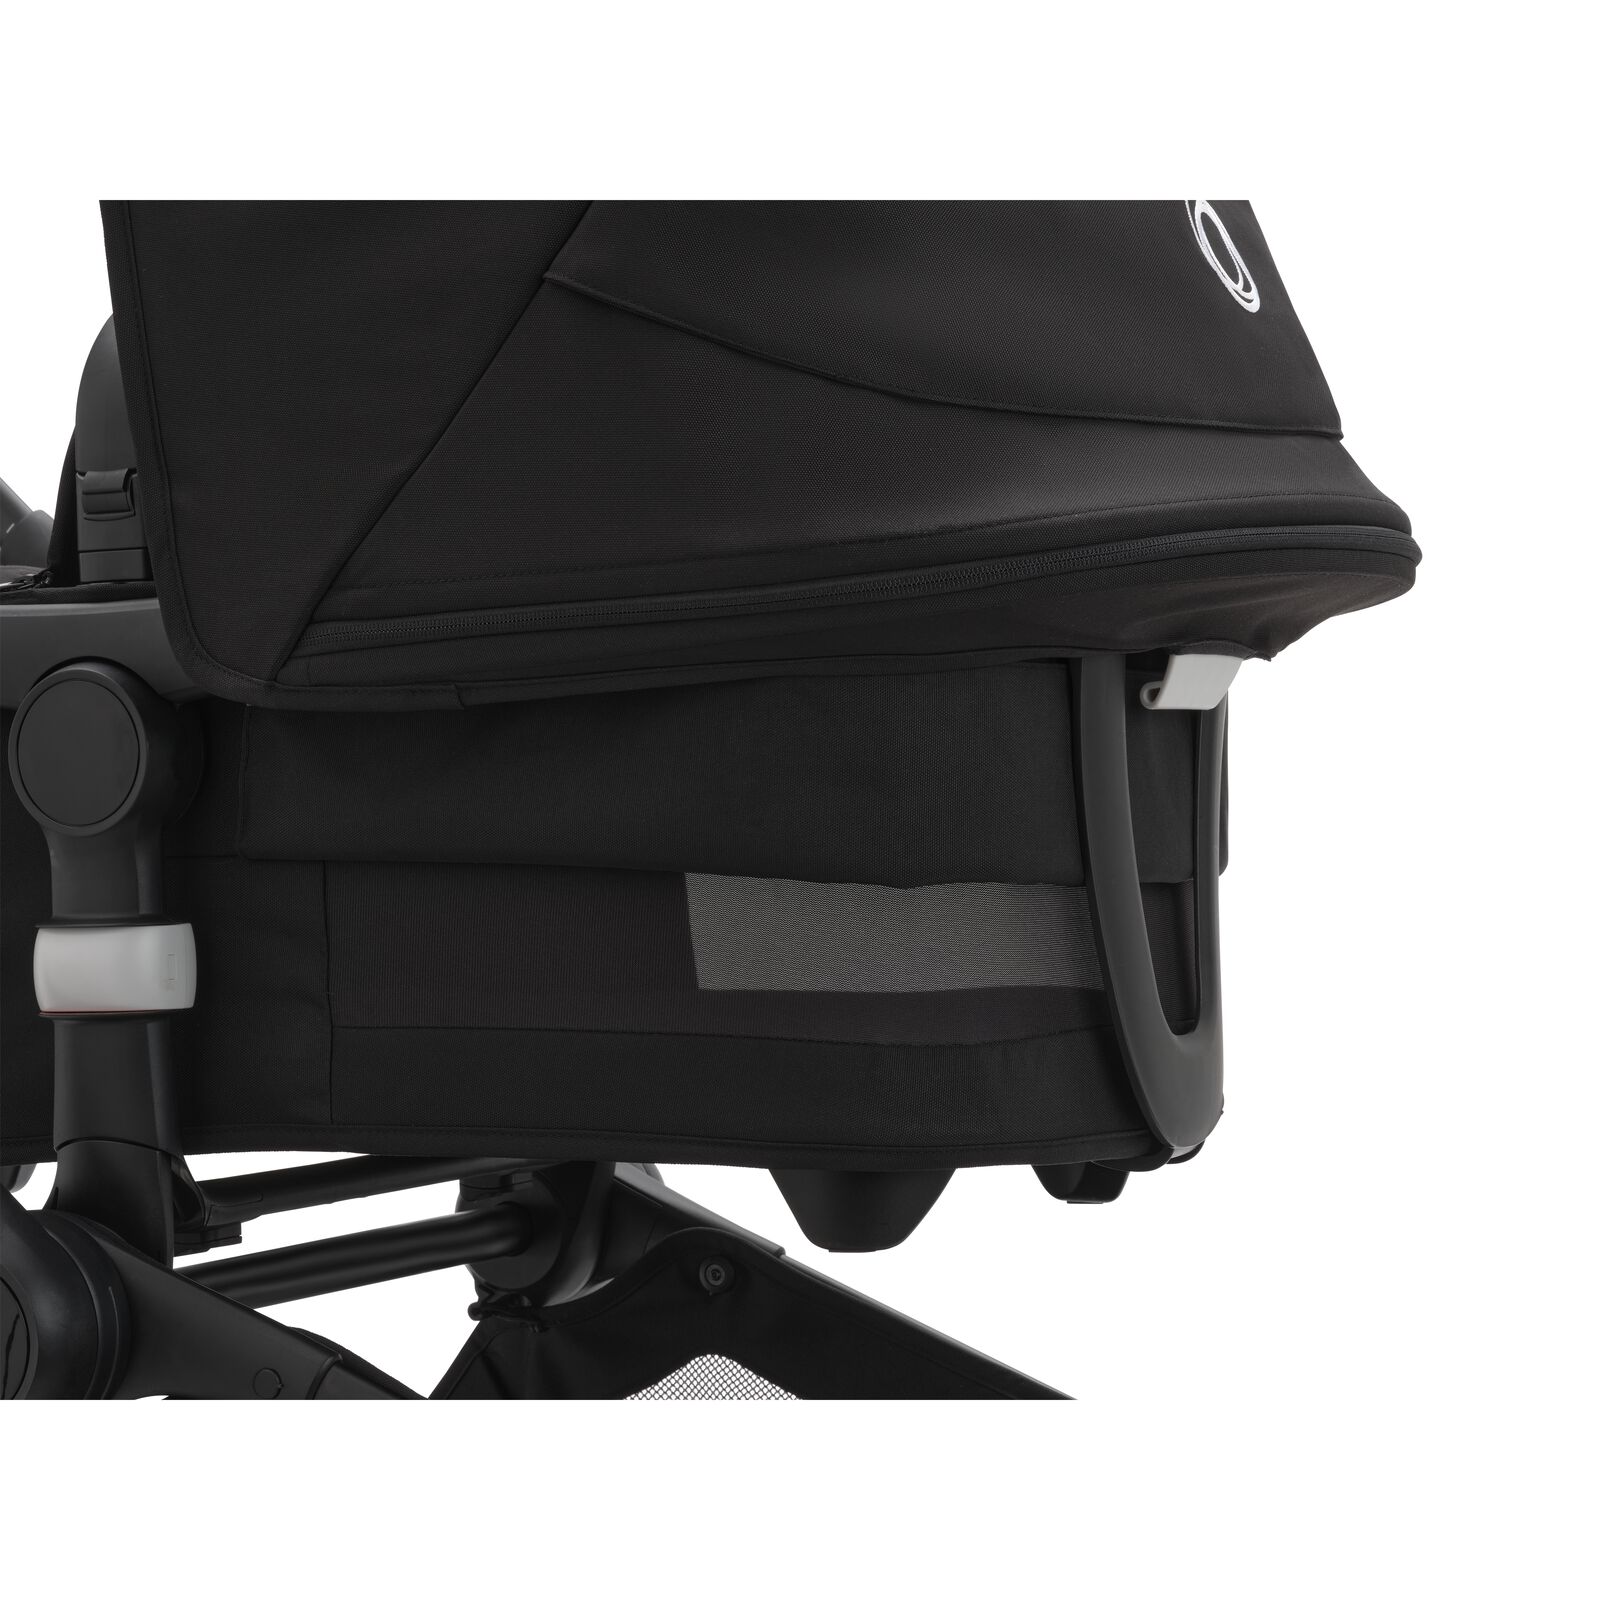 Bugaboo Fox 5 bassinet and seat stroller black base, midnight black fabrics, misty white sun canopy